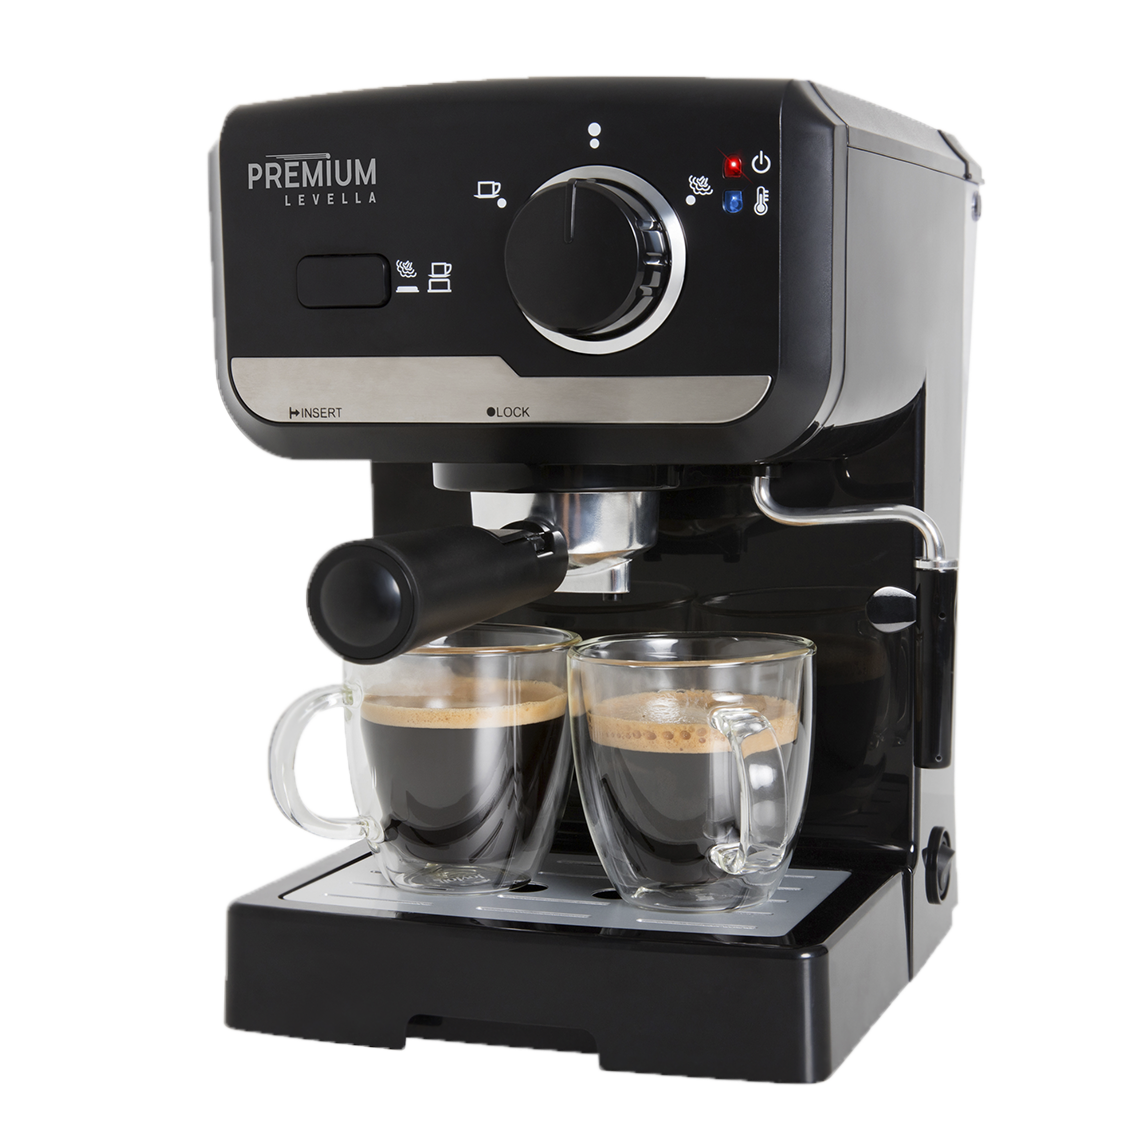 Premium - 3-In-1 Steam Espresso, Cappuccino and Latte Machine 15 Bar Pressure